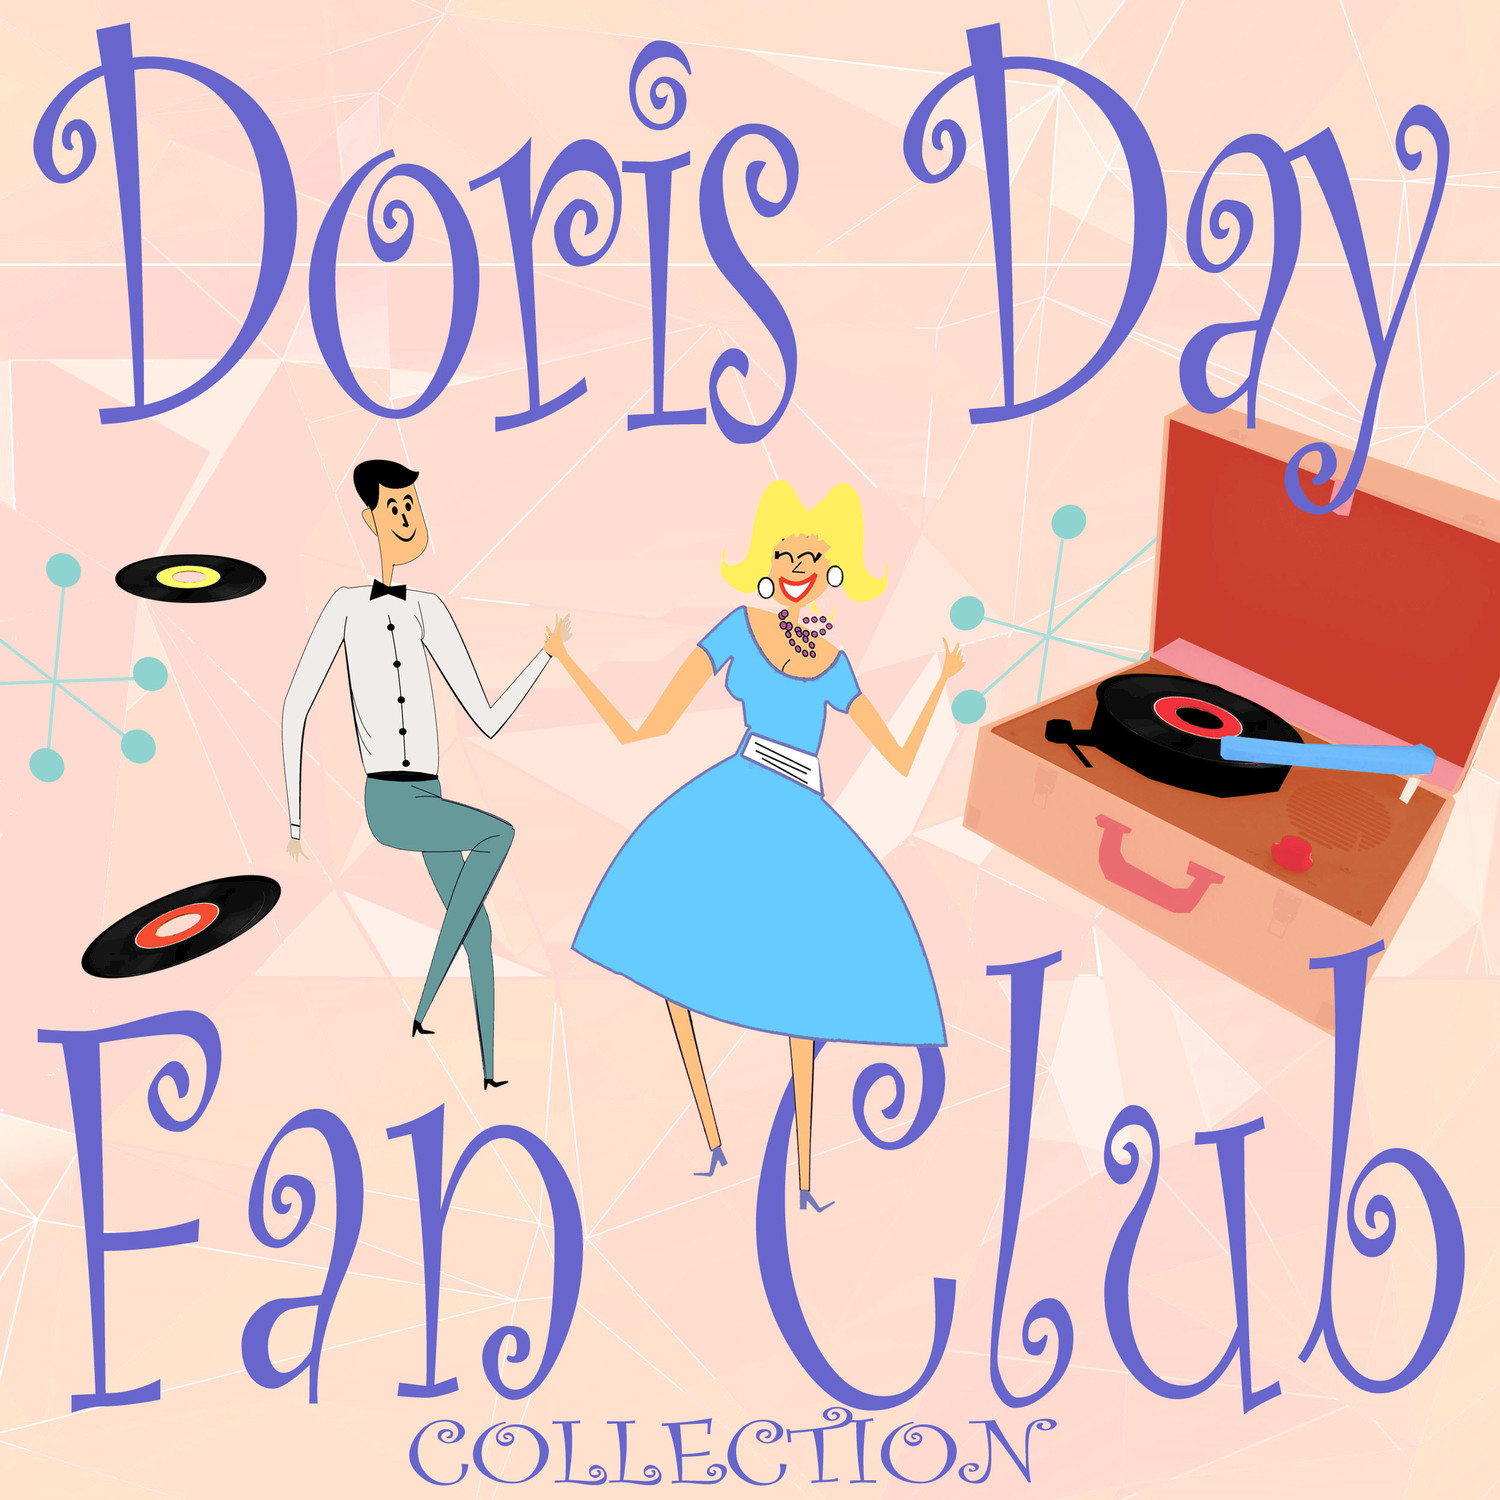 Doris Day Fan Club Collection